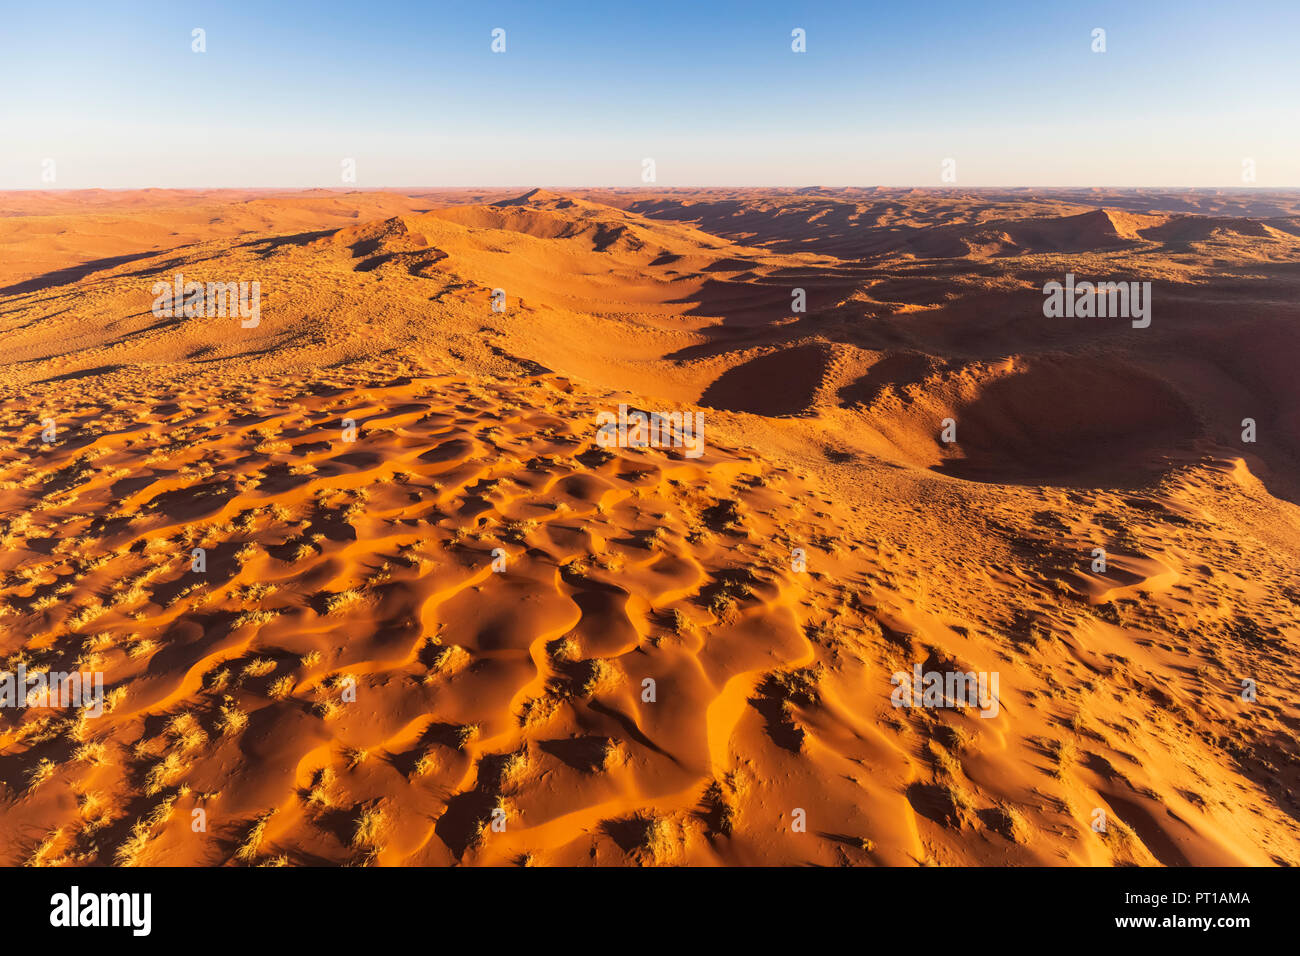 Africa, Namibia, Namib desert, Namib-Naukluft National Park, Aerial view of desert dunes Stock Photo